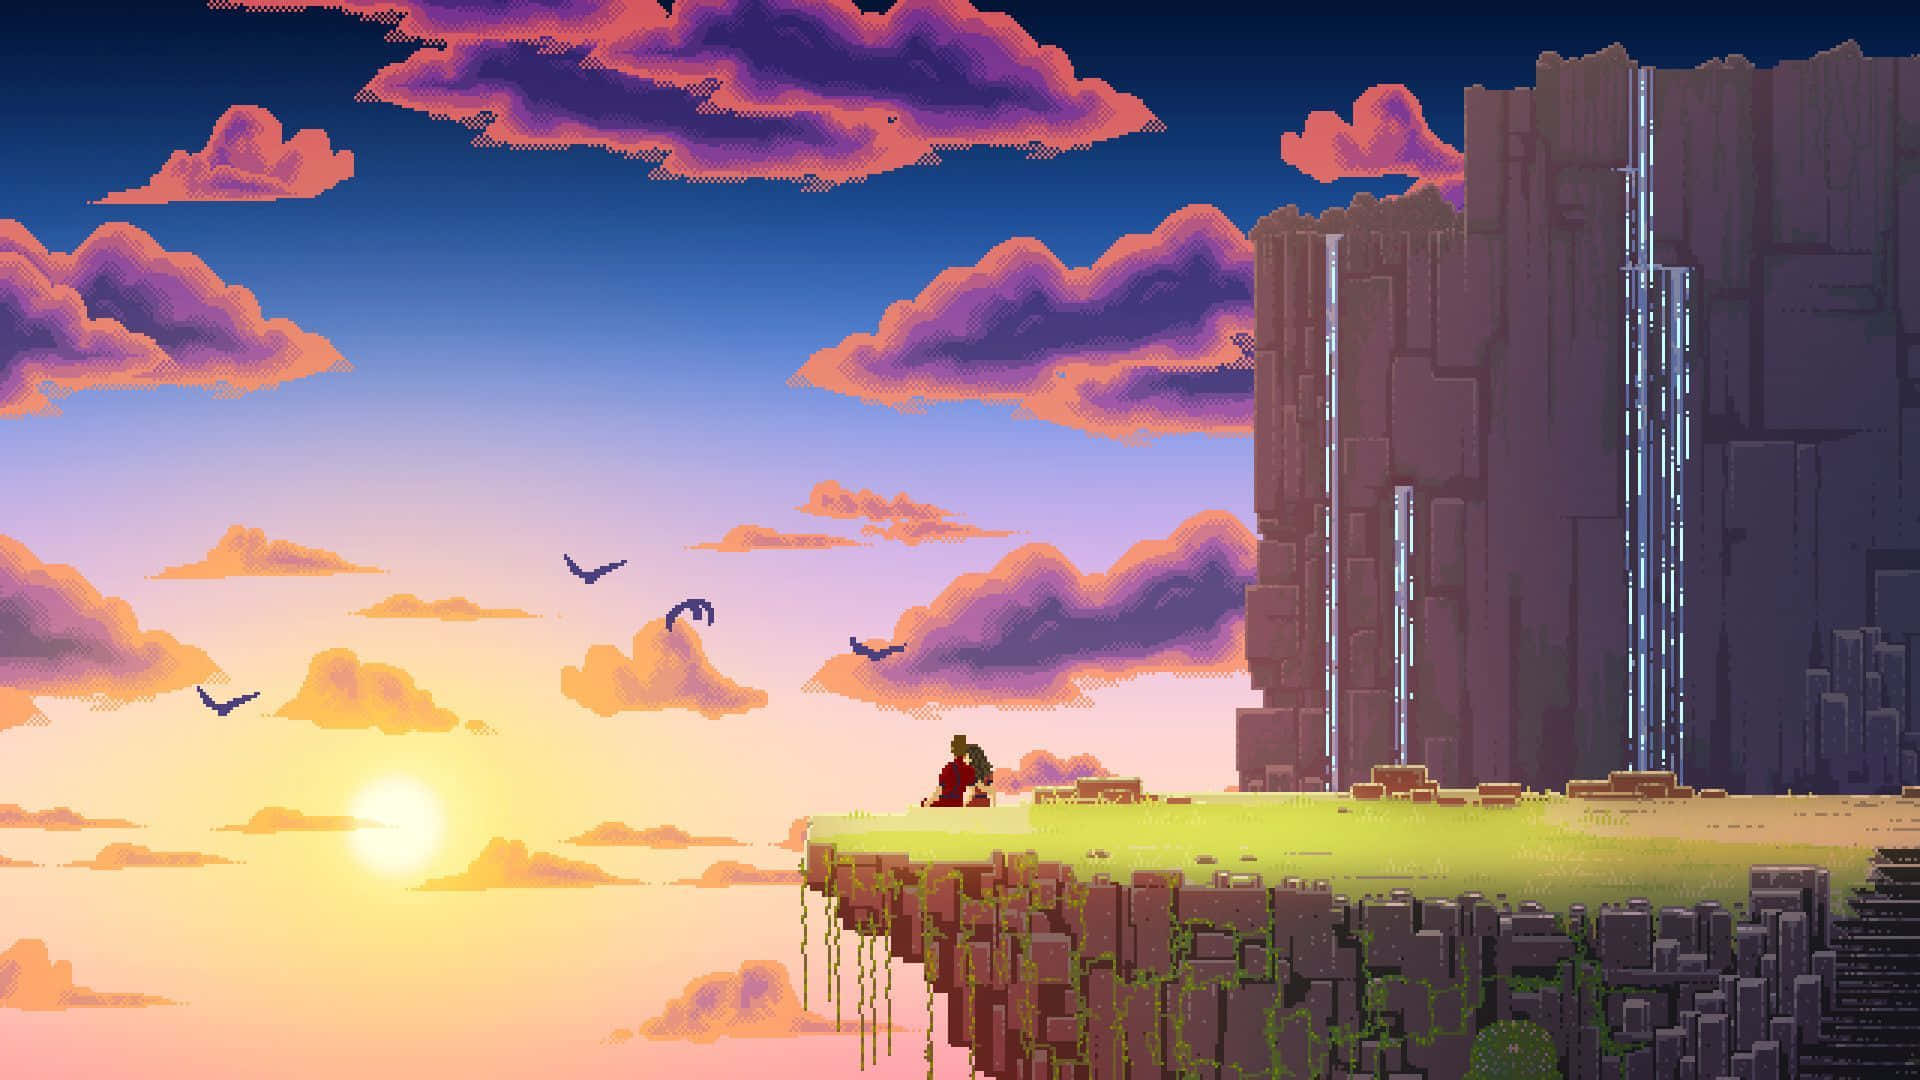 Sunset In Destiny Pixel Art